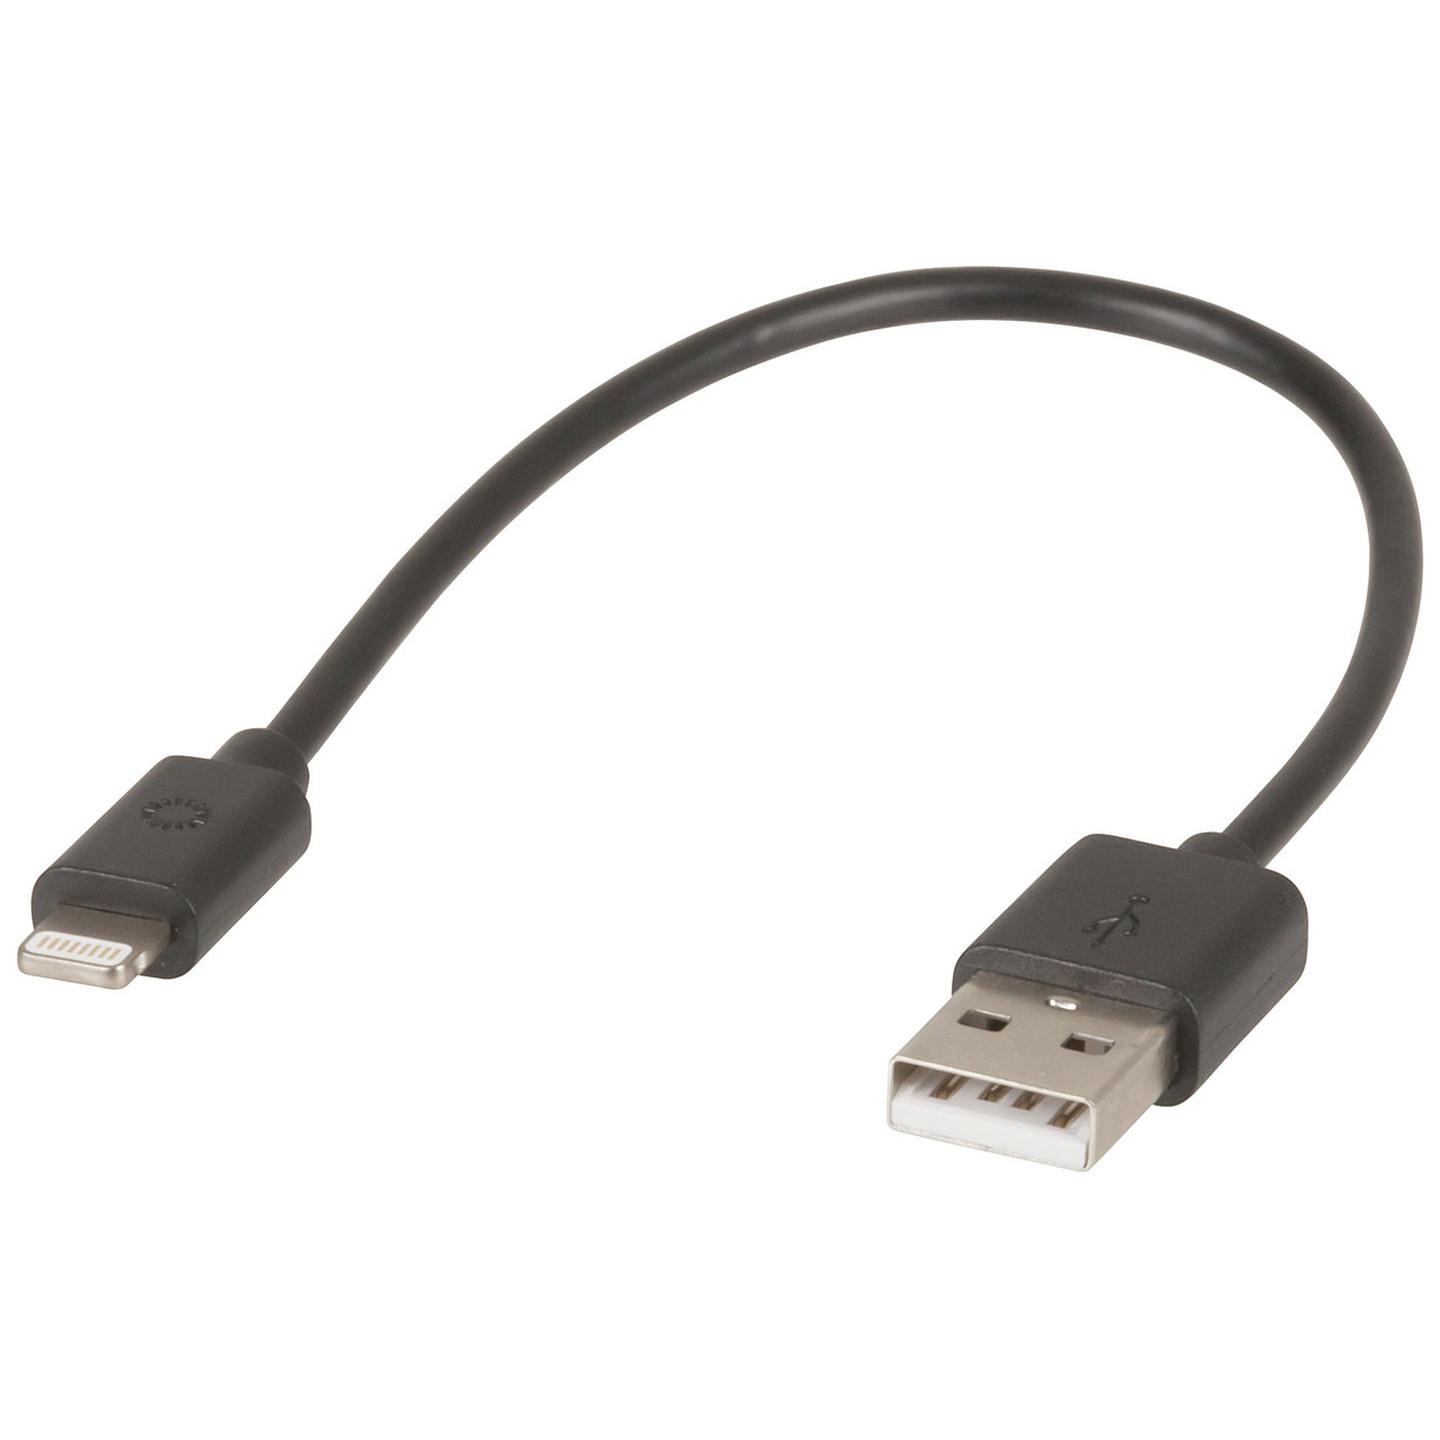 Short USB Lightning Cable